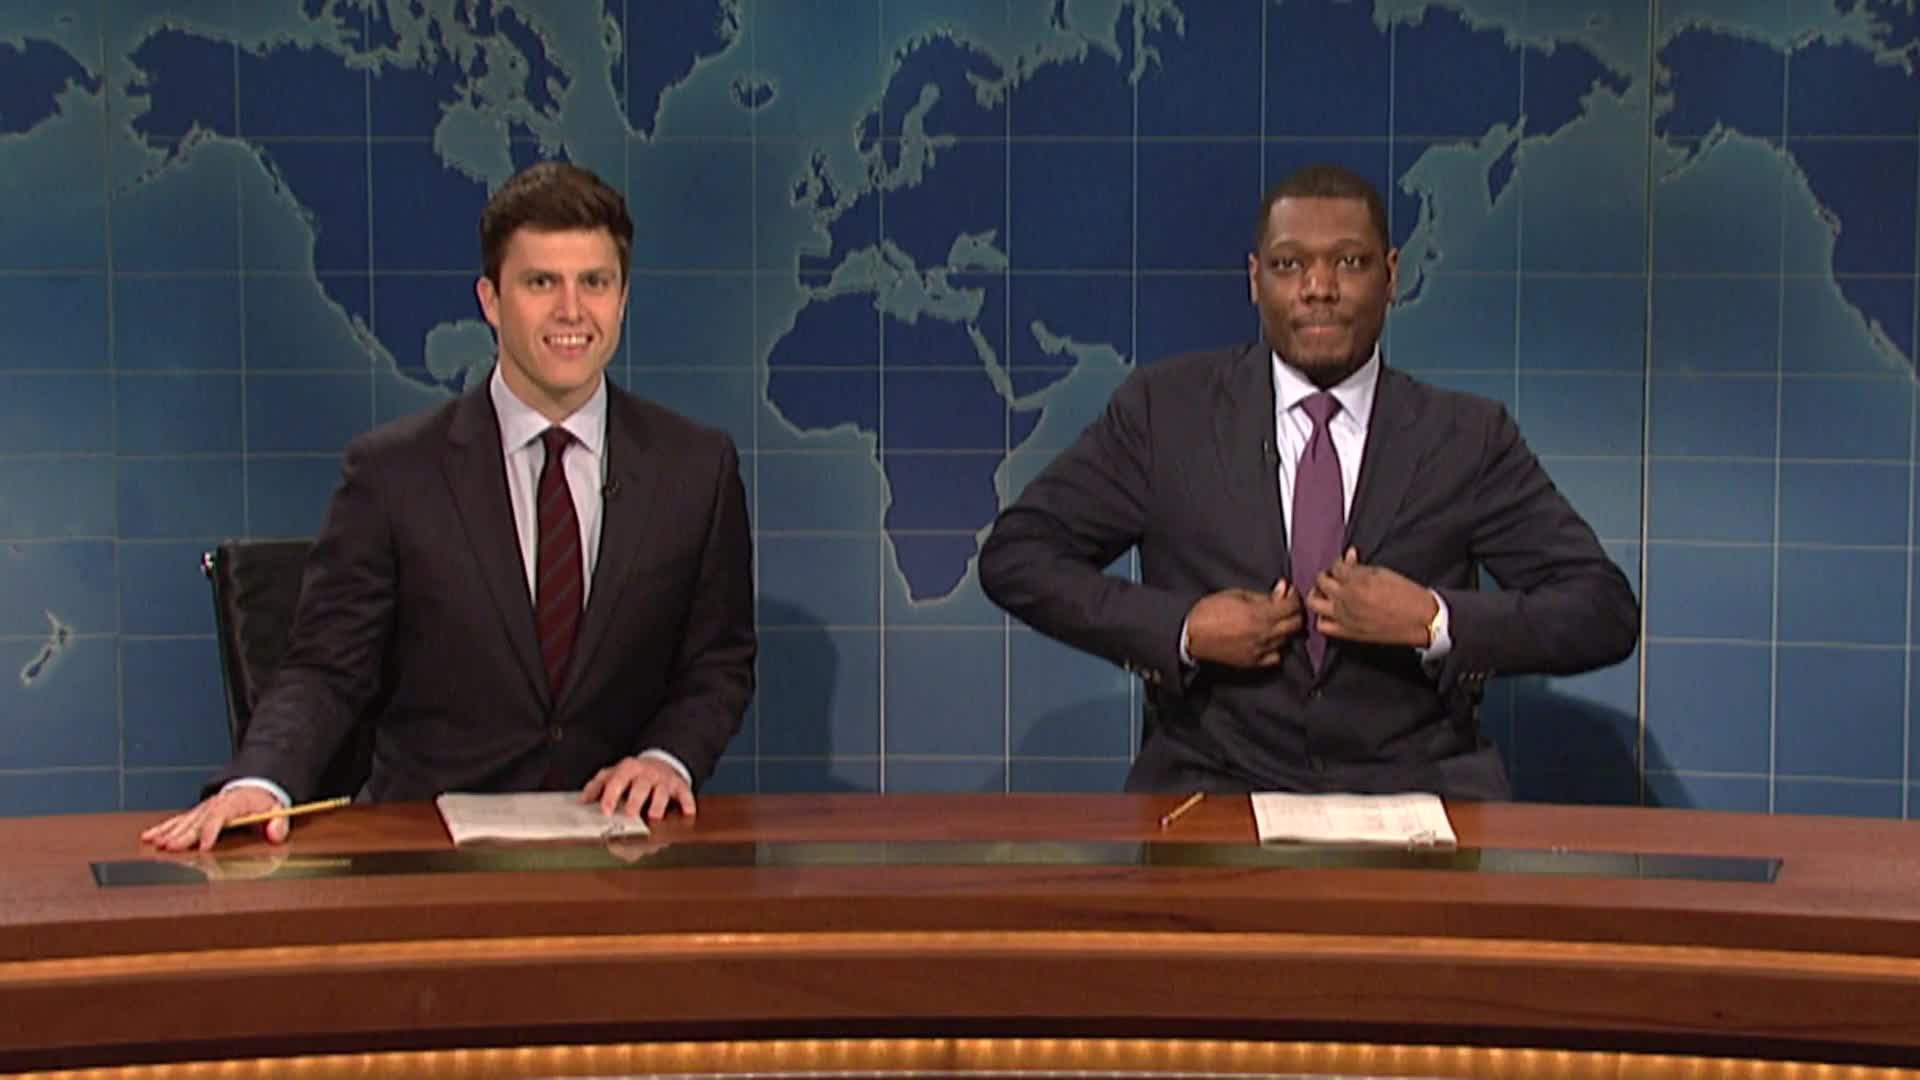 Watch Saturday Night Live Sneak Peek: SNL Season 44 is Almost Here! - NBC.com